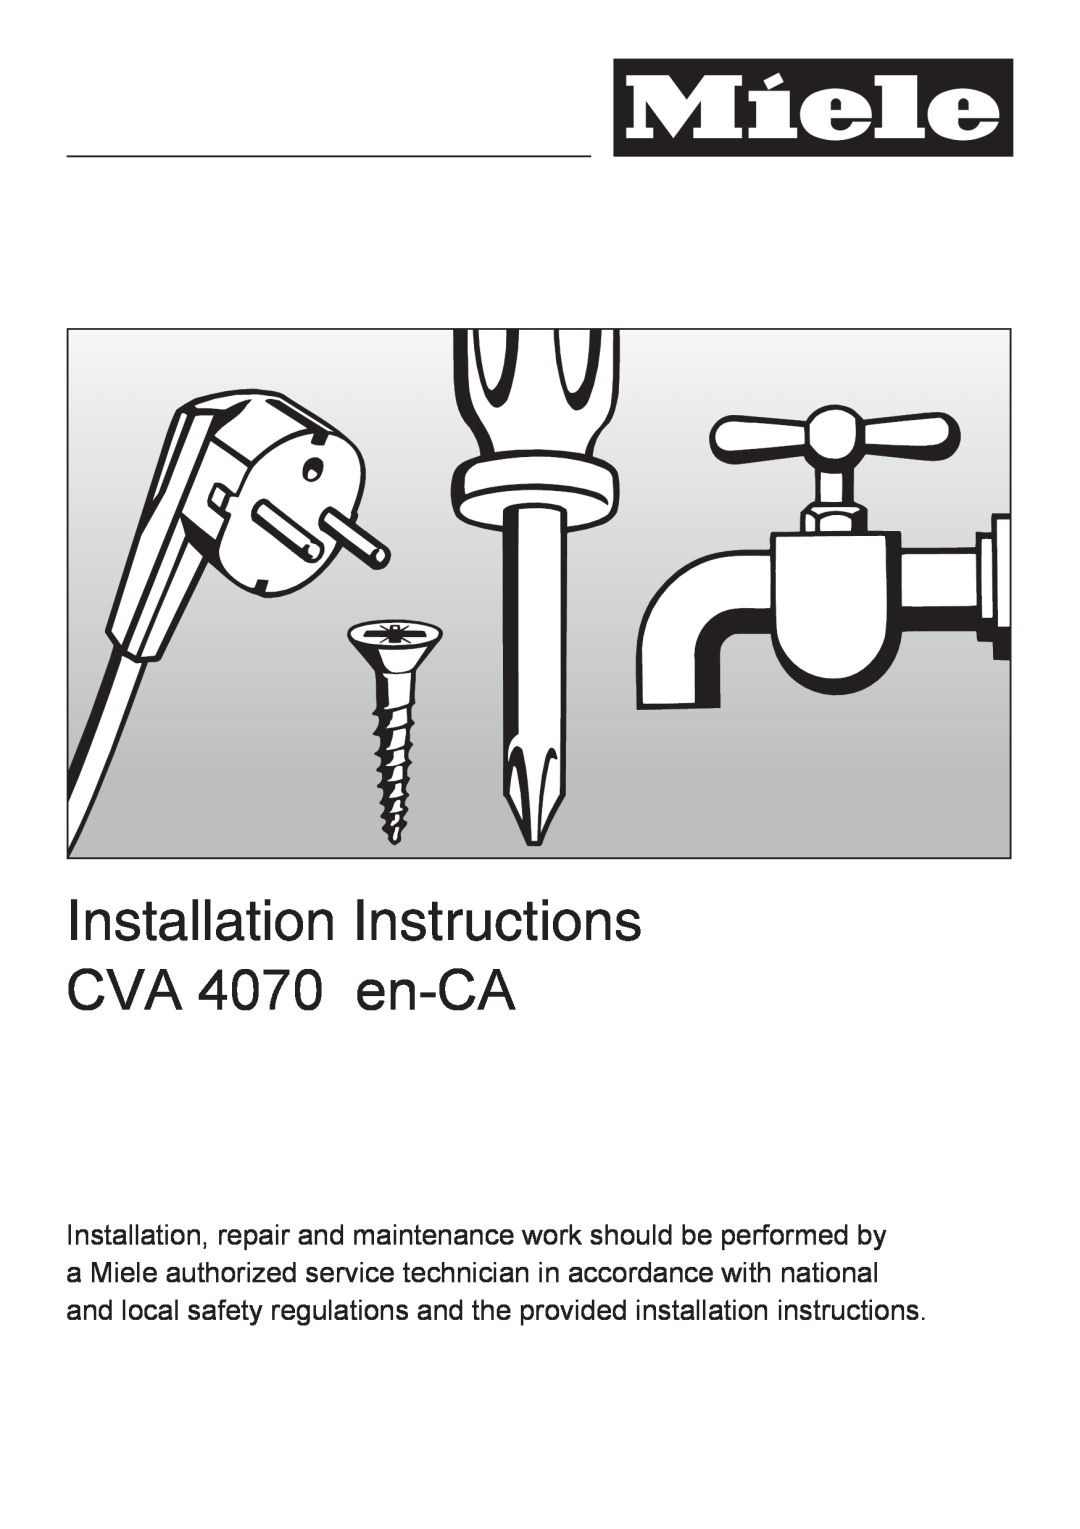 Miele CVA 4070 EN-CA installation instructions Installation Instructions CVA 4070 en-CA 